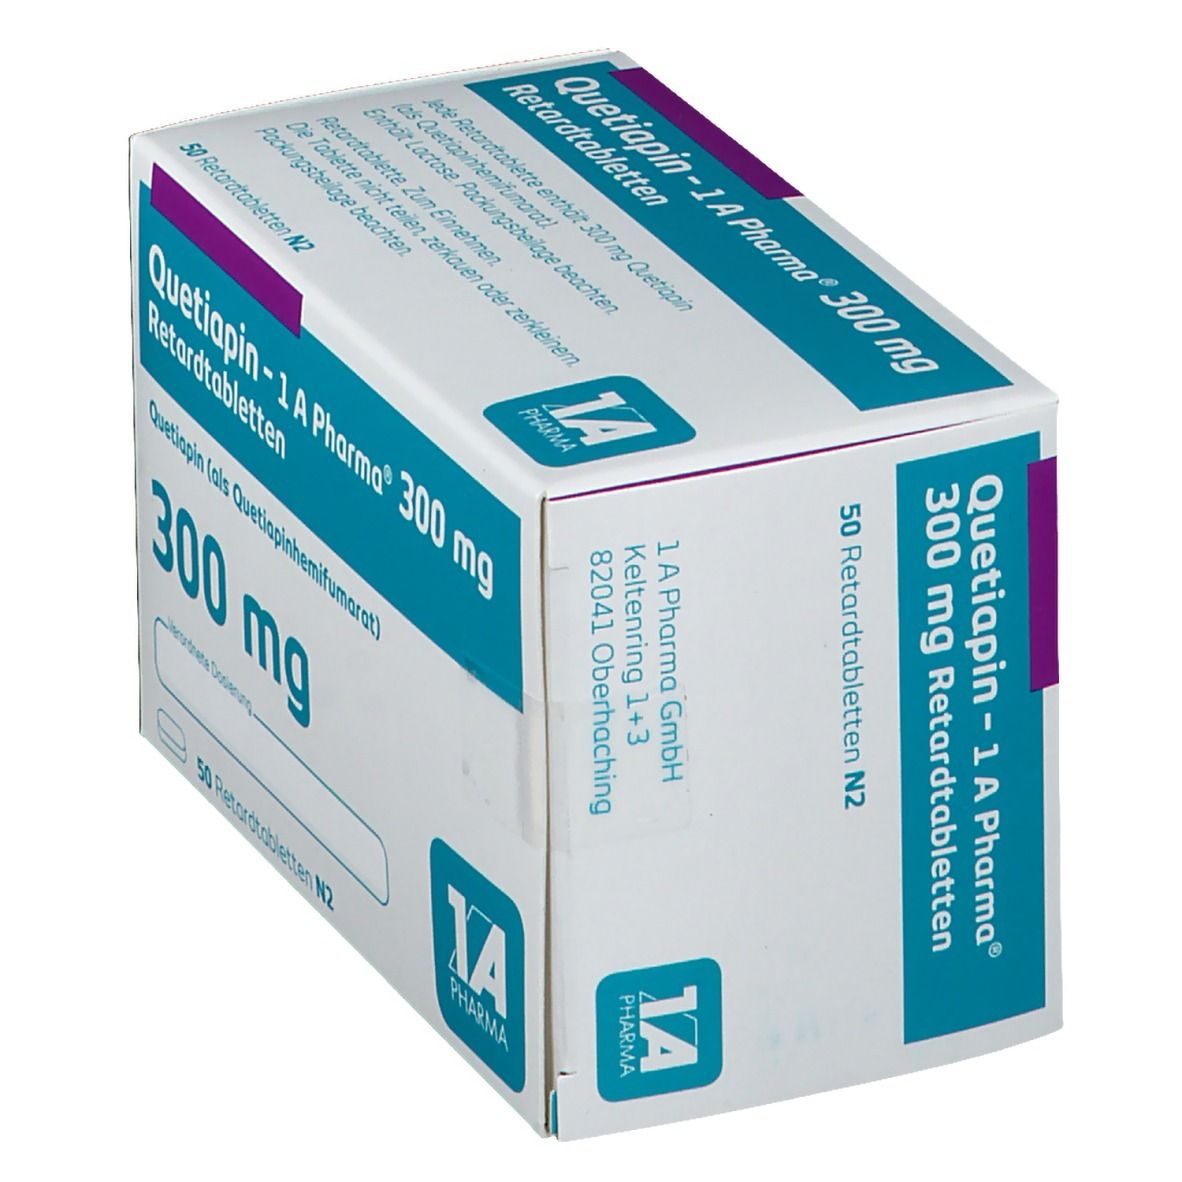 Quetiapin - 1 A Pharma® 300 mg